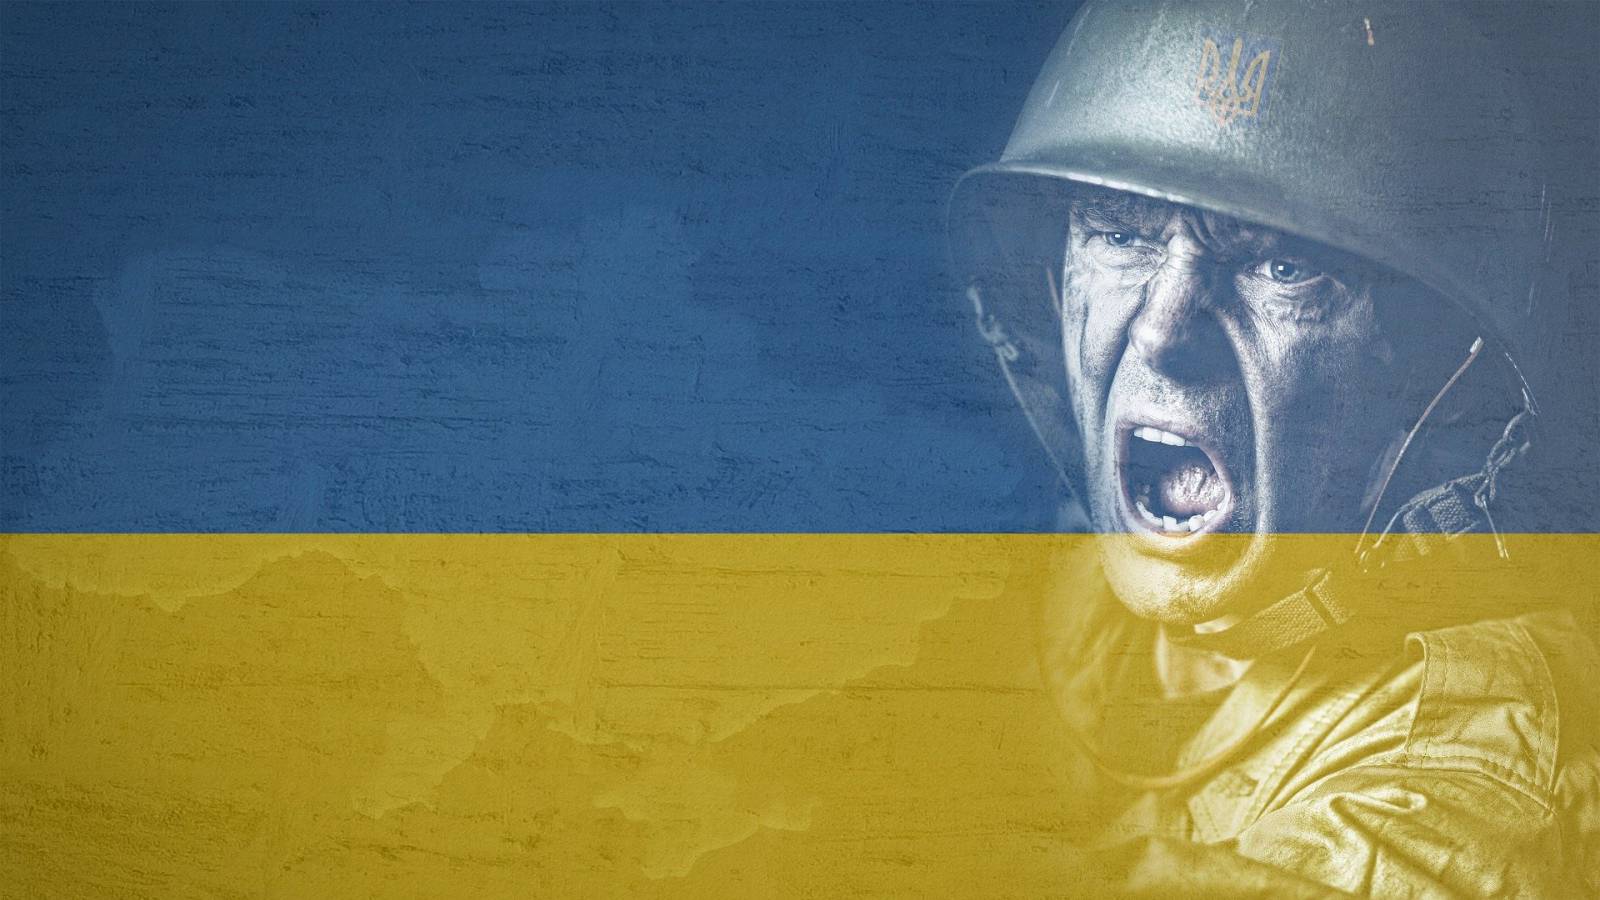 MI6 Rusia ar Putea Opri din Nou Operatiunile de Atac in Ucraina